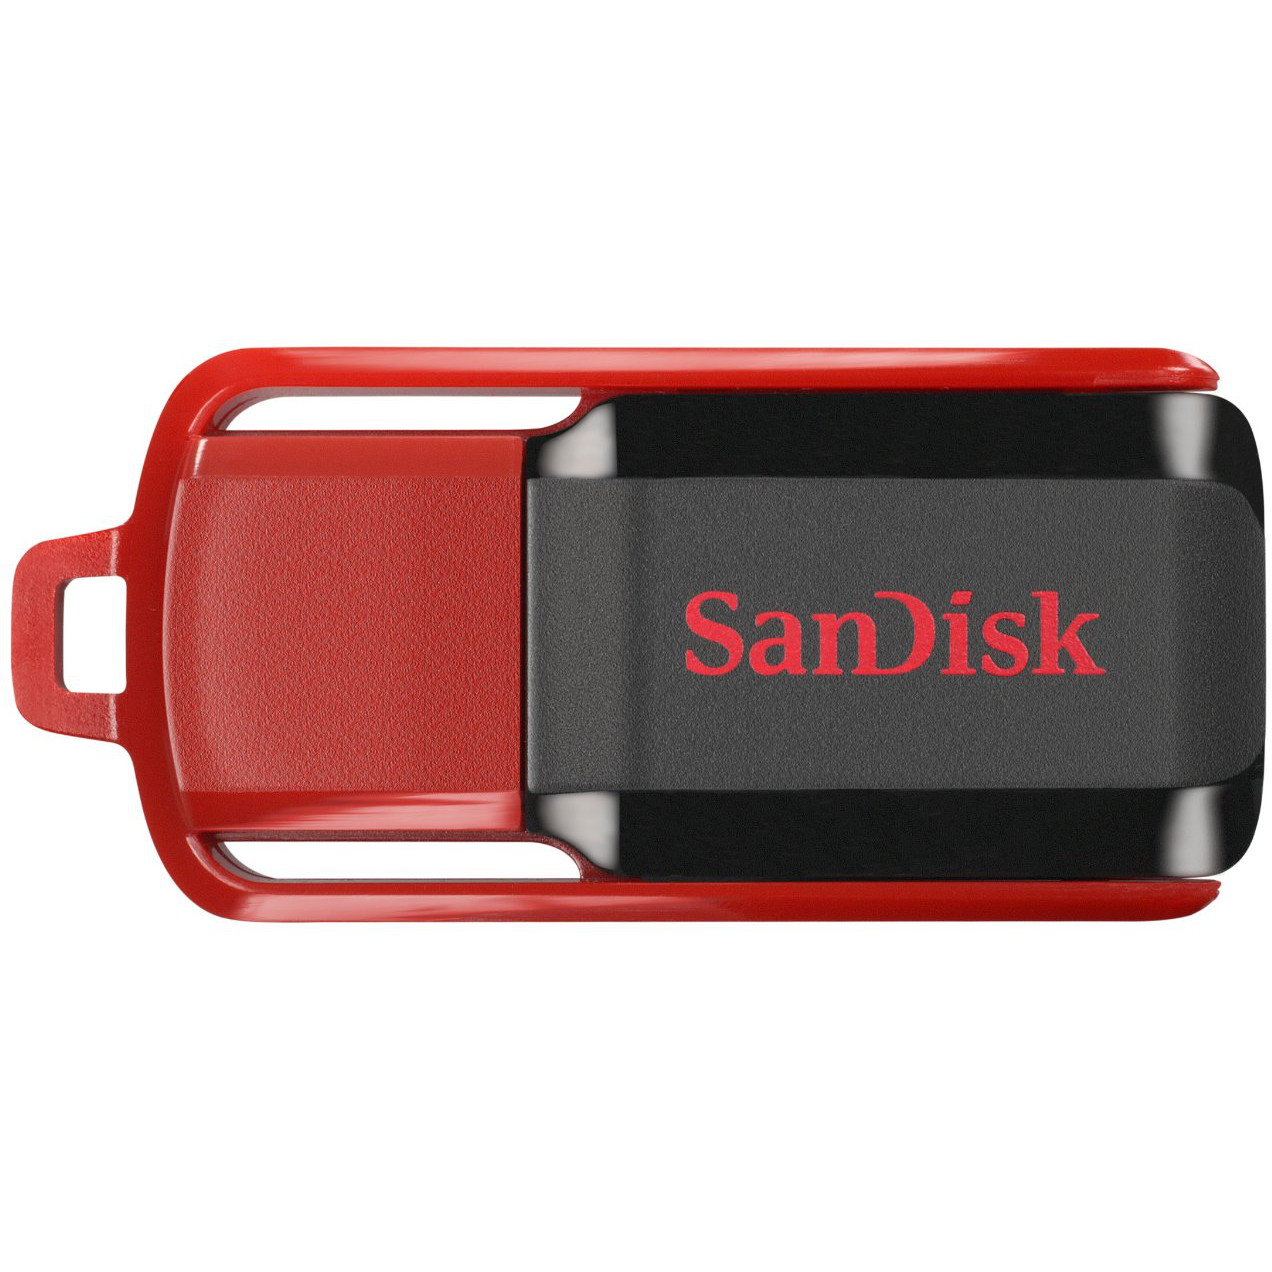  Memorie USB Sandisk, 16 GB, USB 2.0, Rosu/Negru 